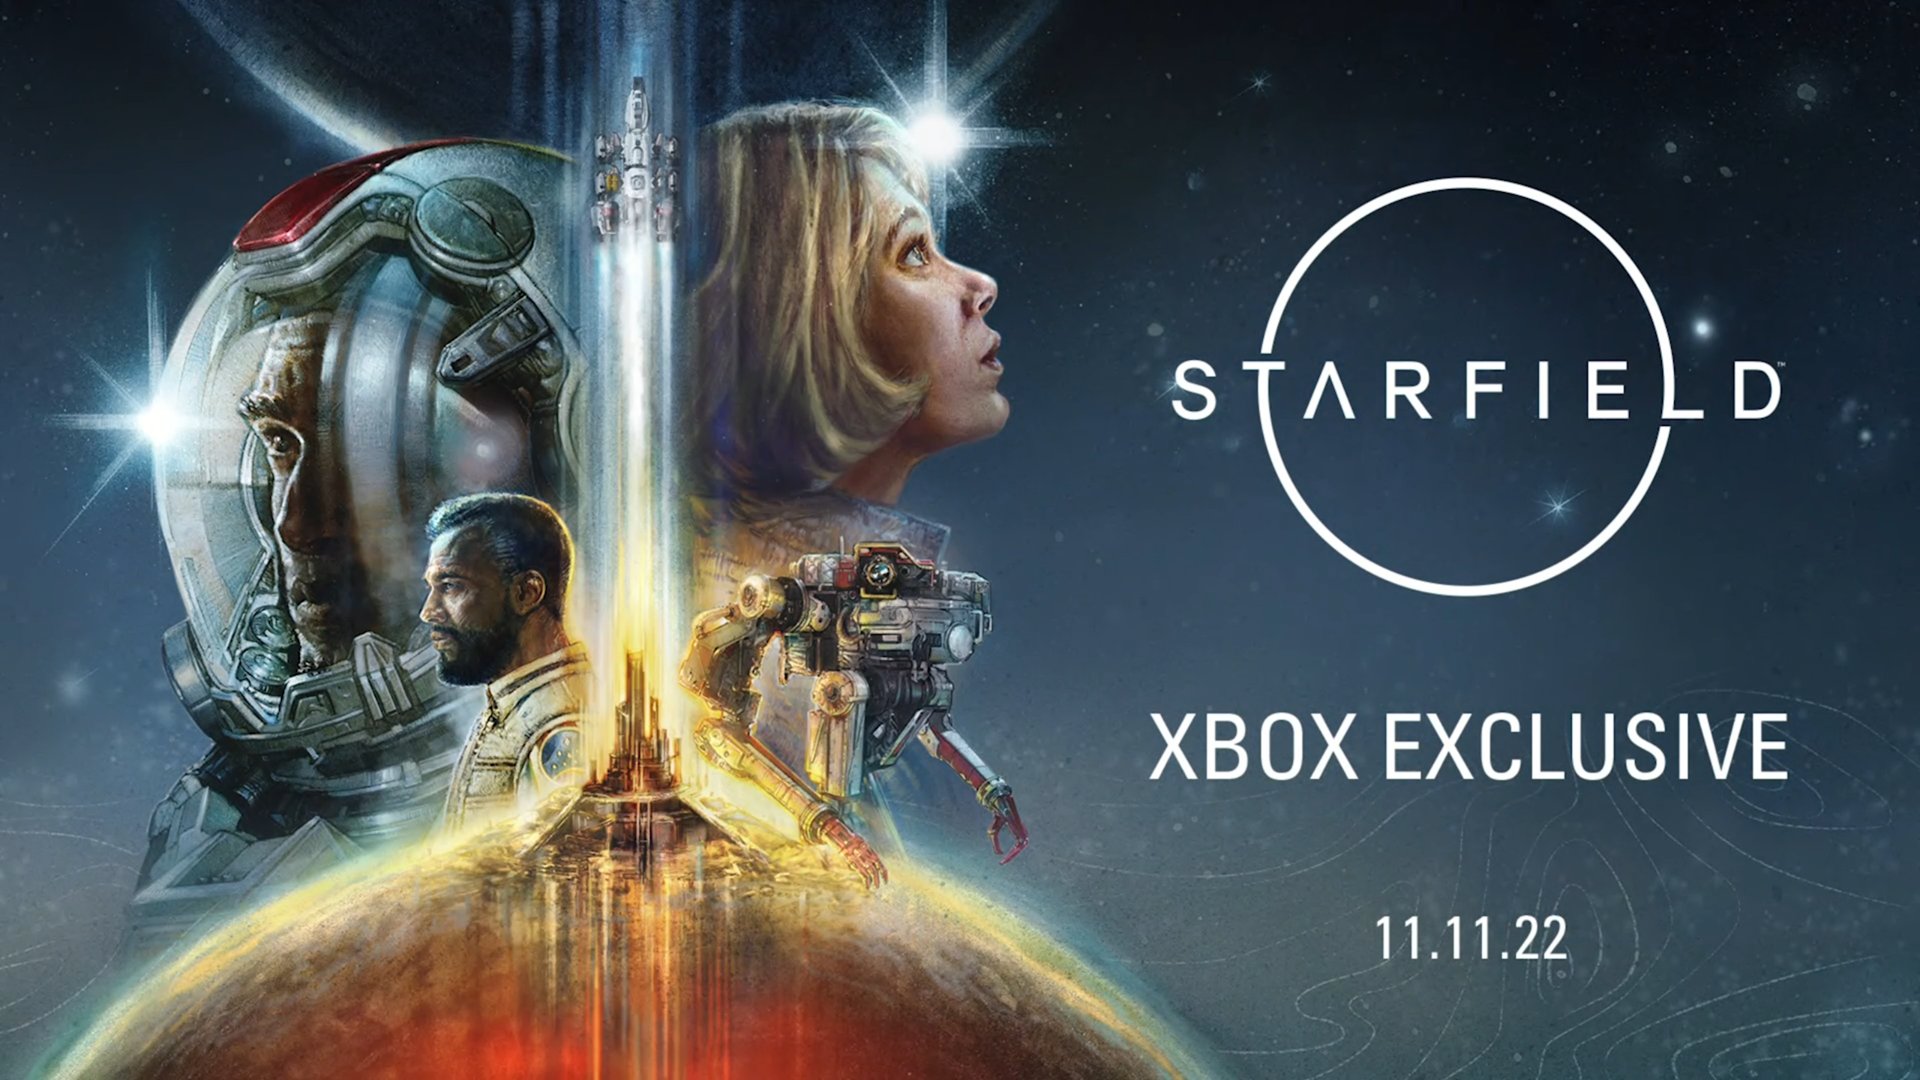 Starfield launches November 11 2022